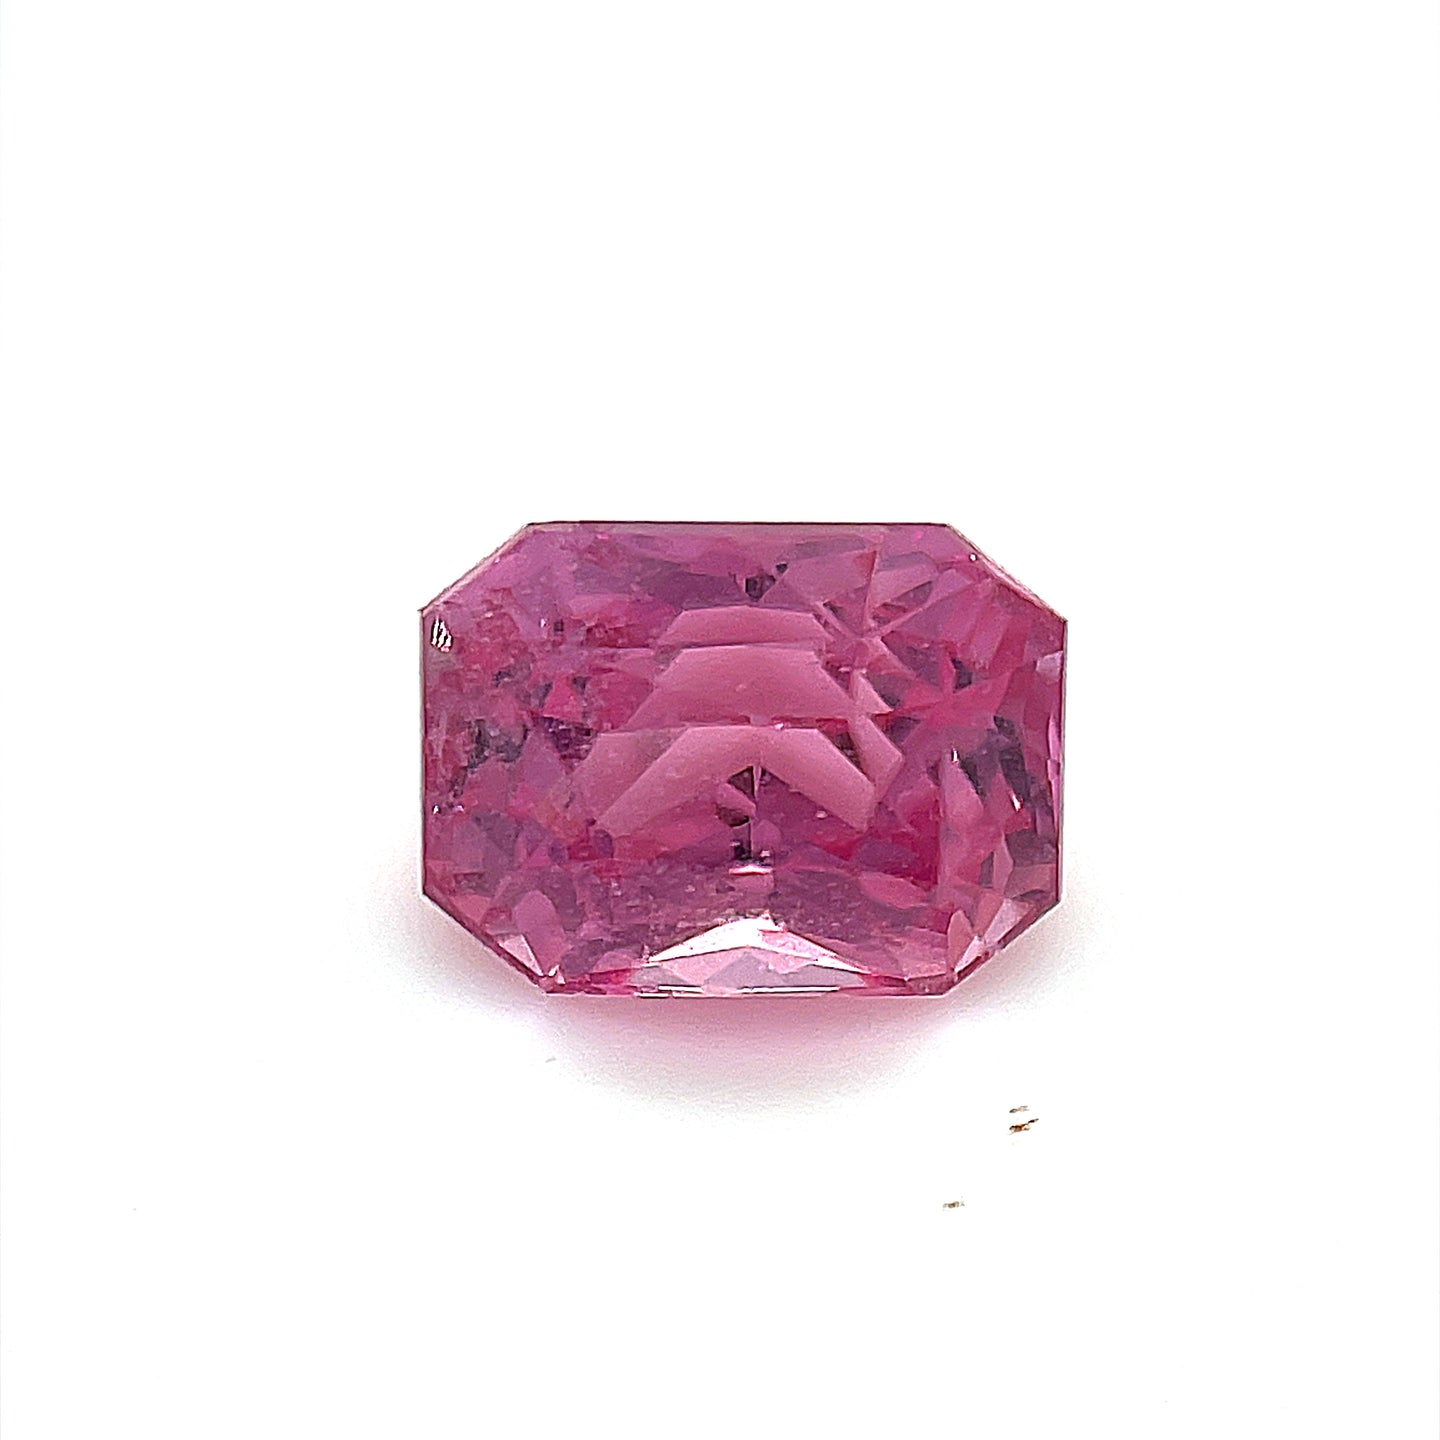 1.39 ct. Radiant Cut Pink Sapphire